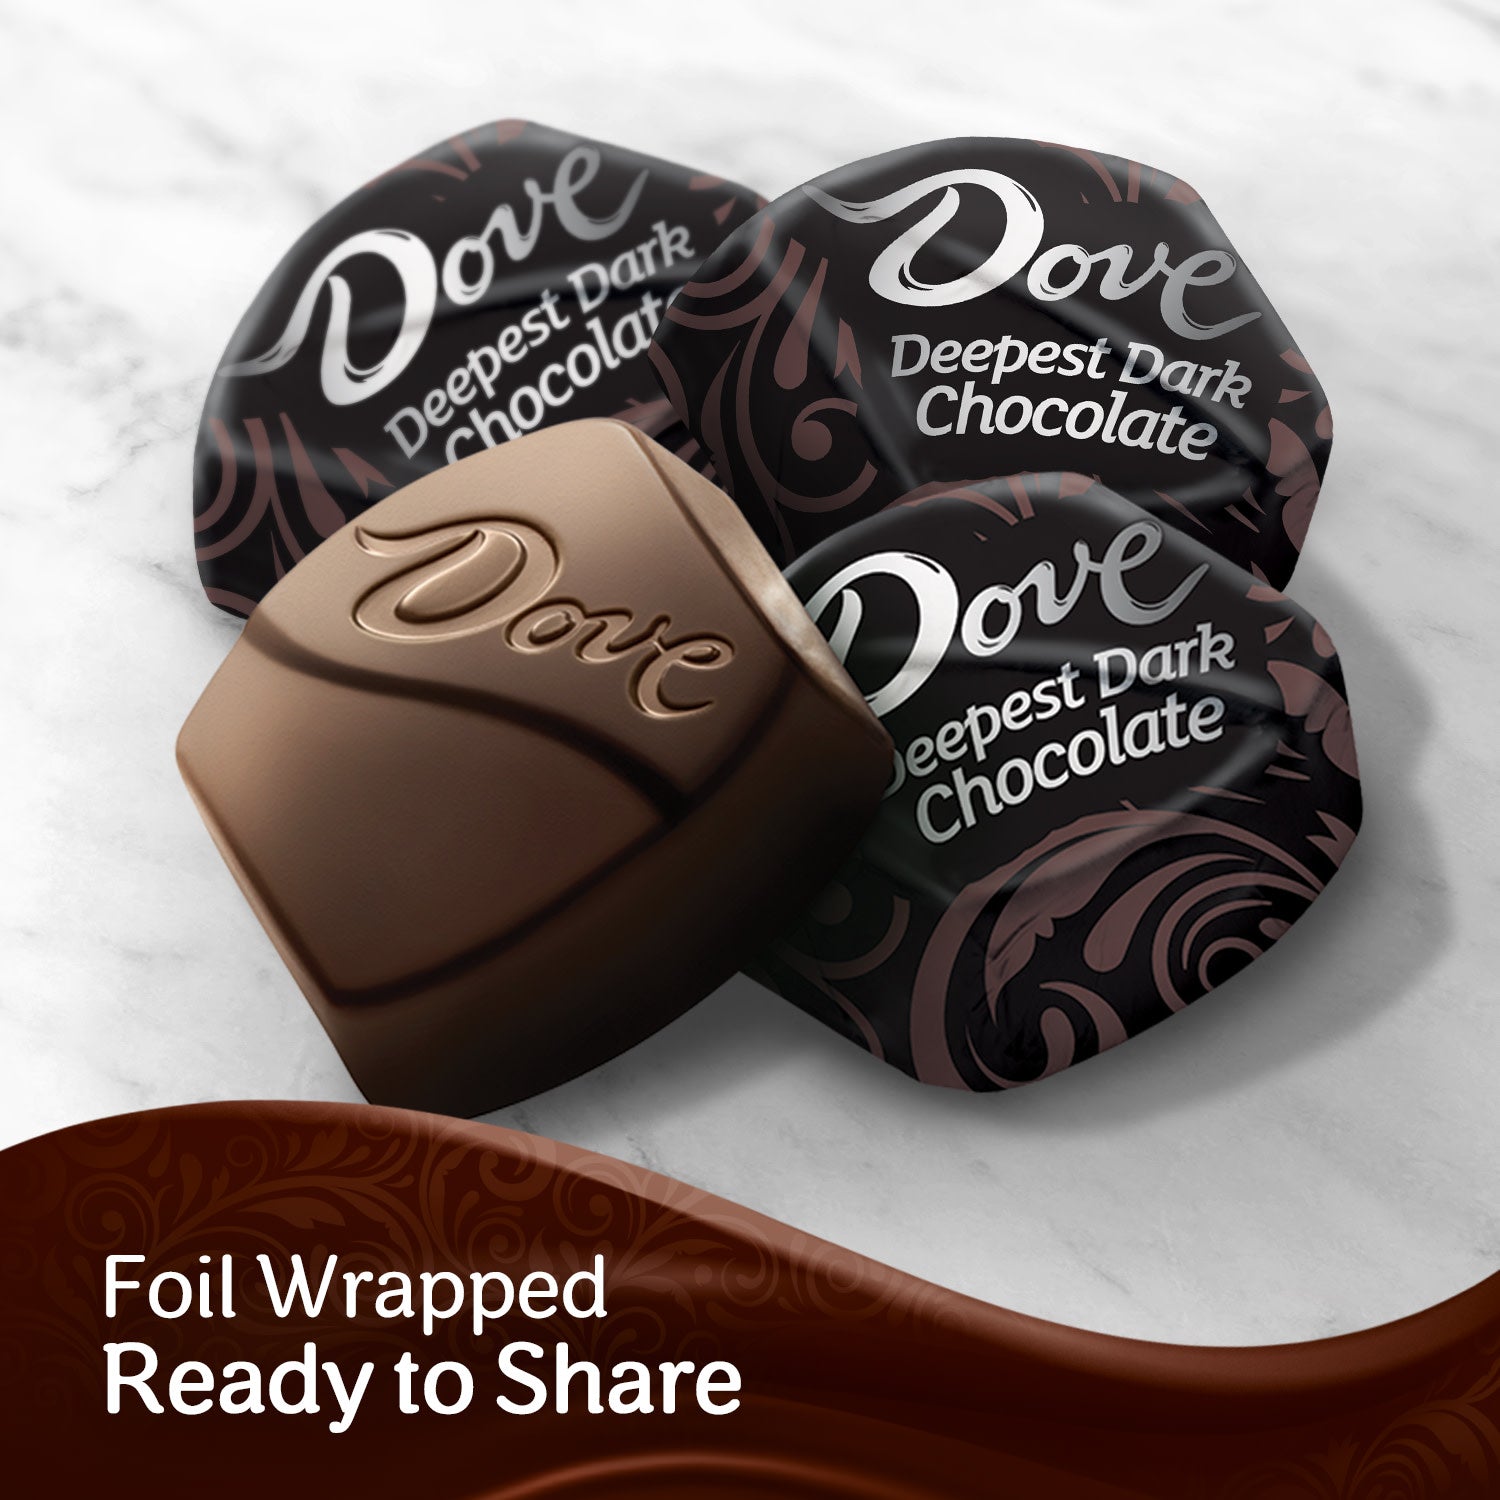 Dove Deepest Dark 82% Cacao Chocolate Promises, 7.23oz